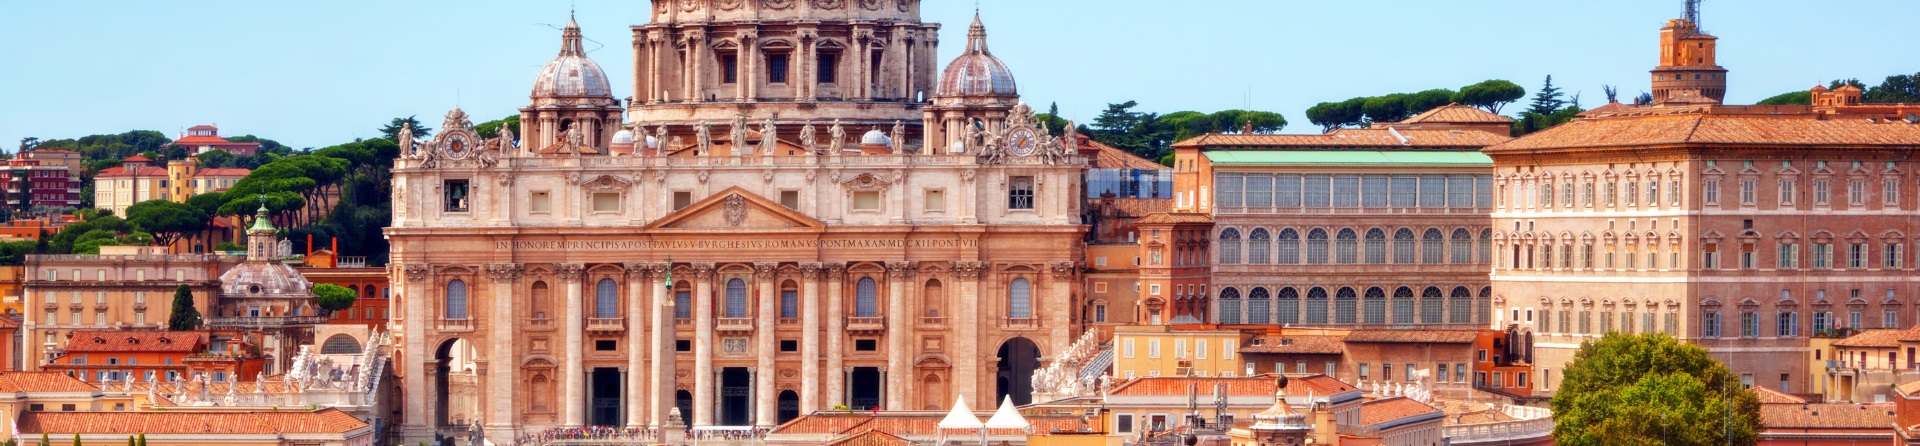 Vatican & Sistine Chapel Afternoon Tour €65